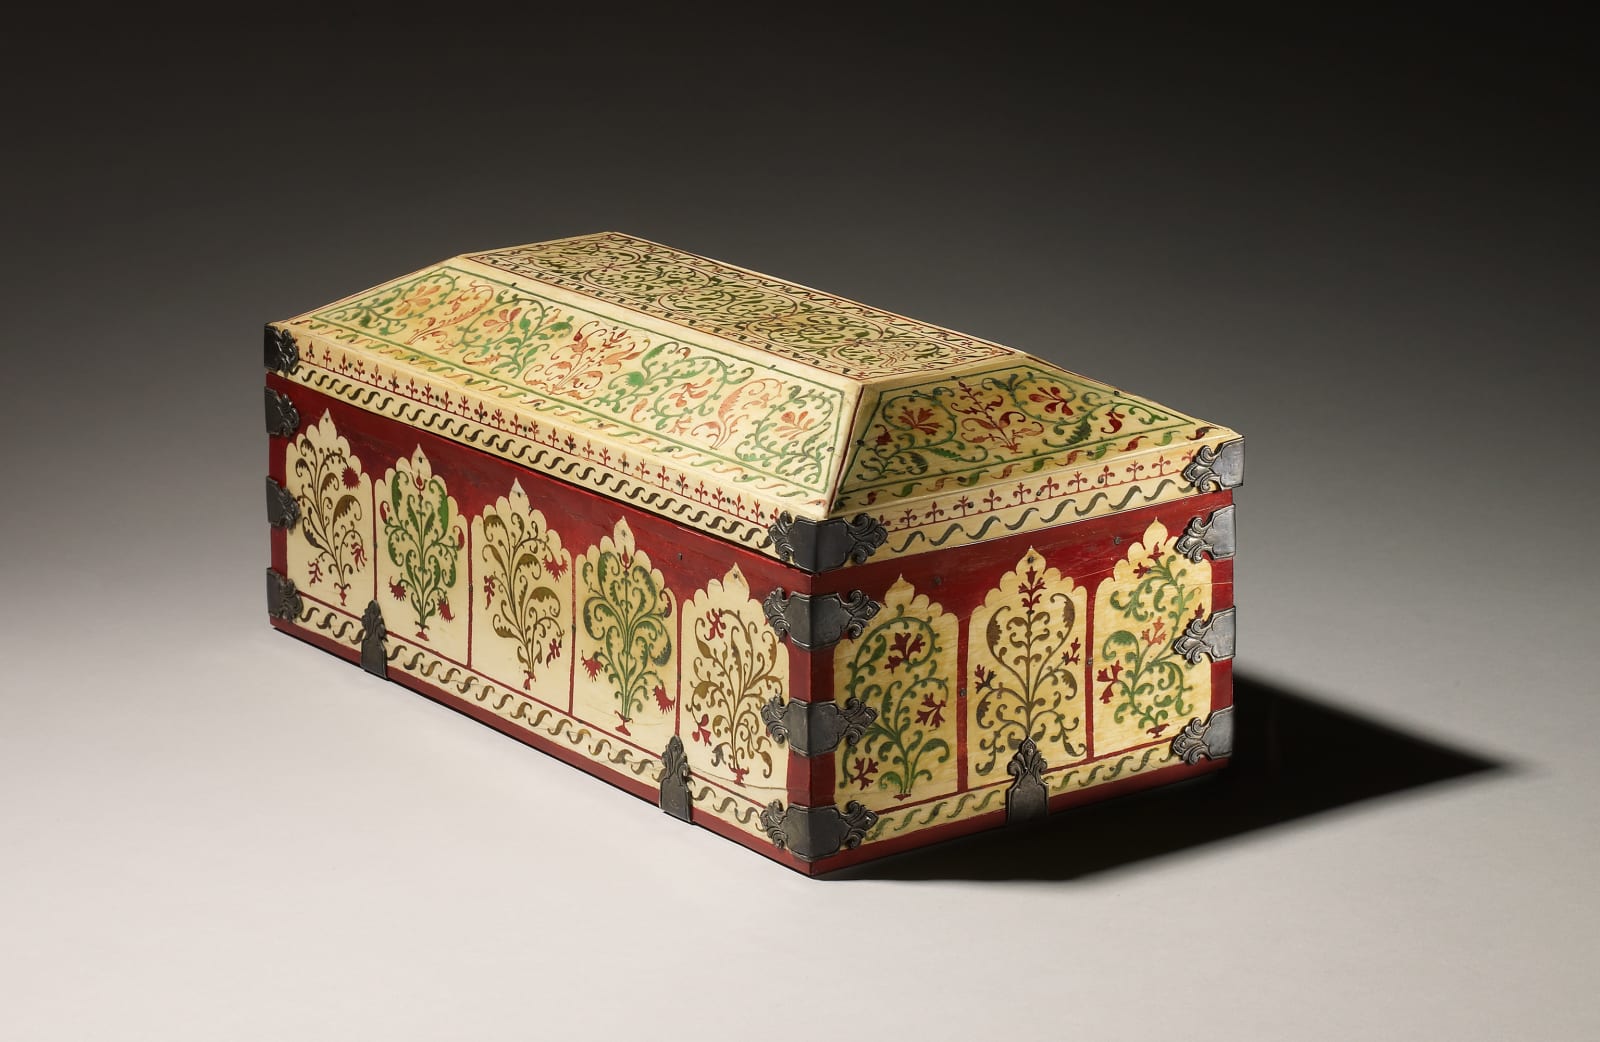 Painted ivory writer's box (qalamdan), South India, Kerala, Late 18th century - early 19th century